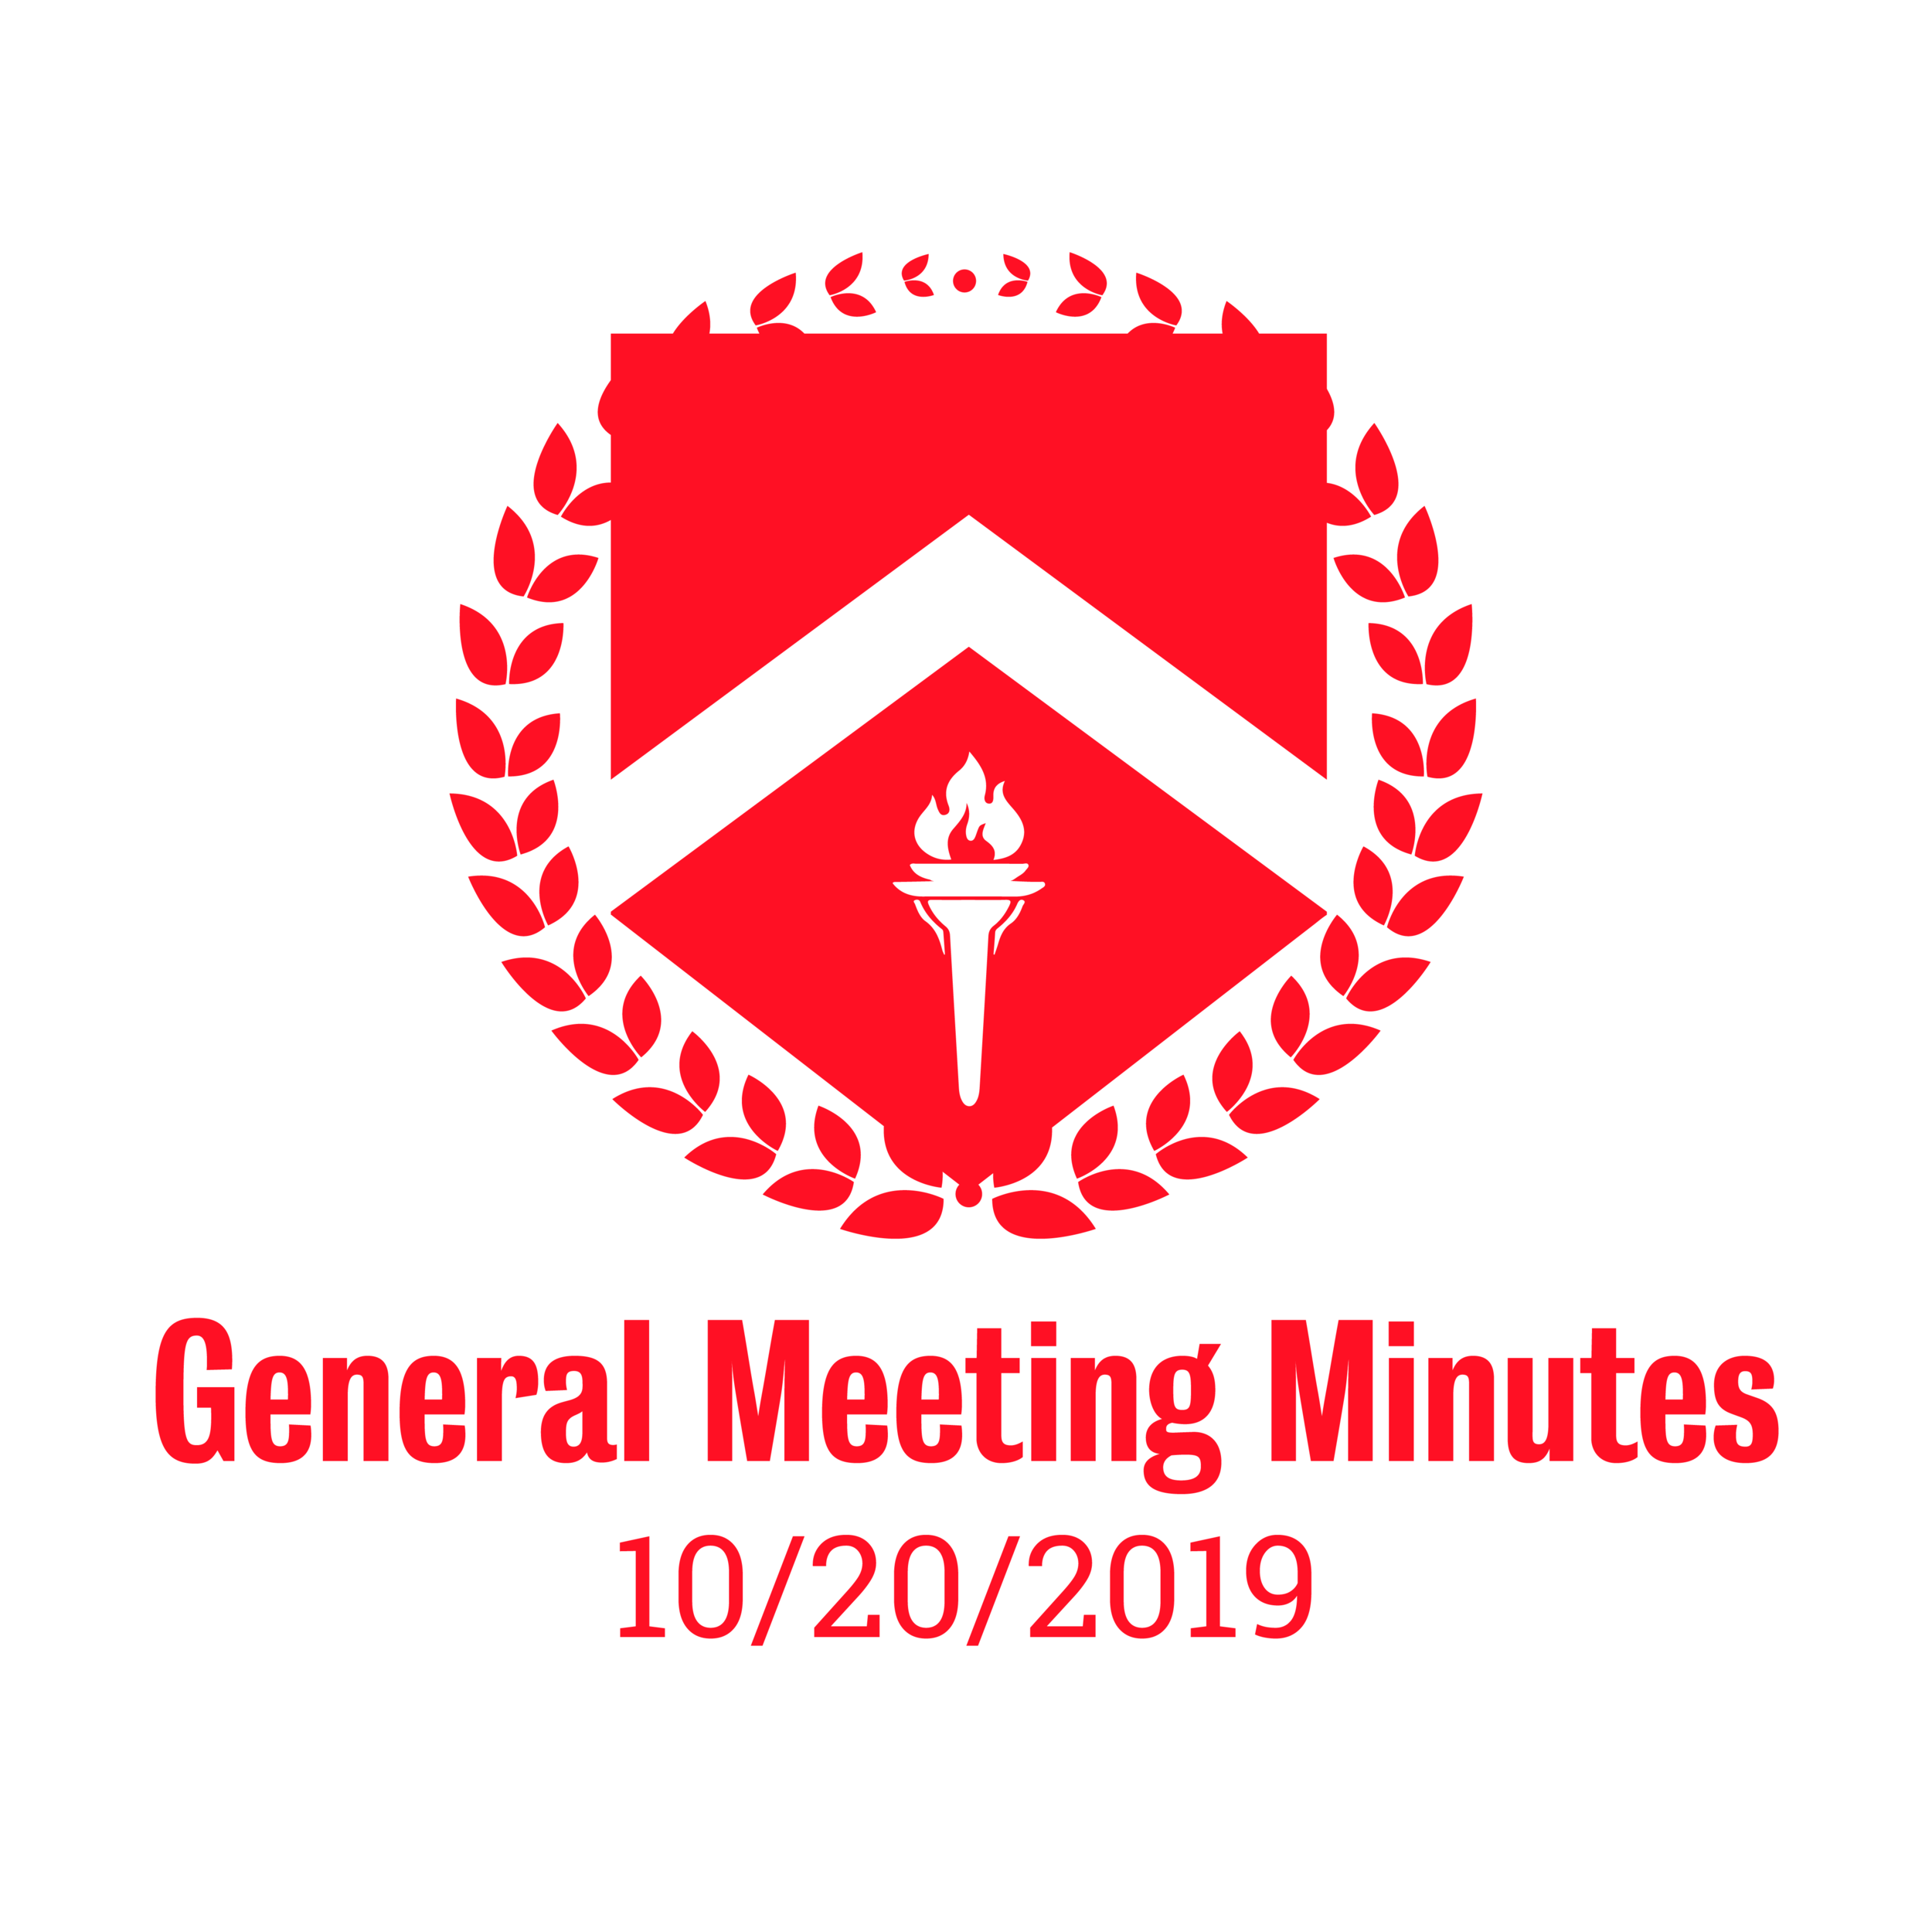 General Meeting Minutes 10/20/2019